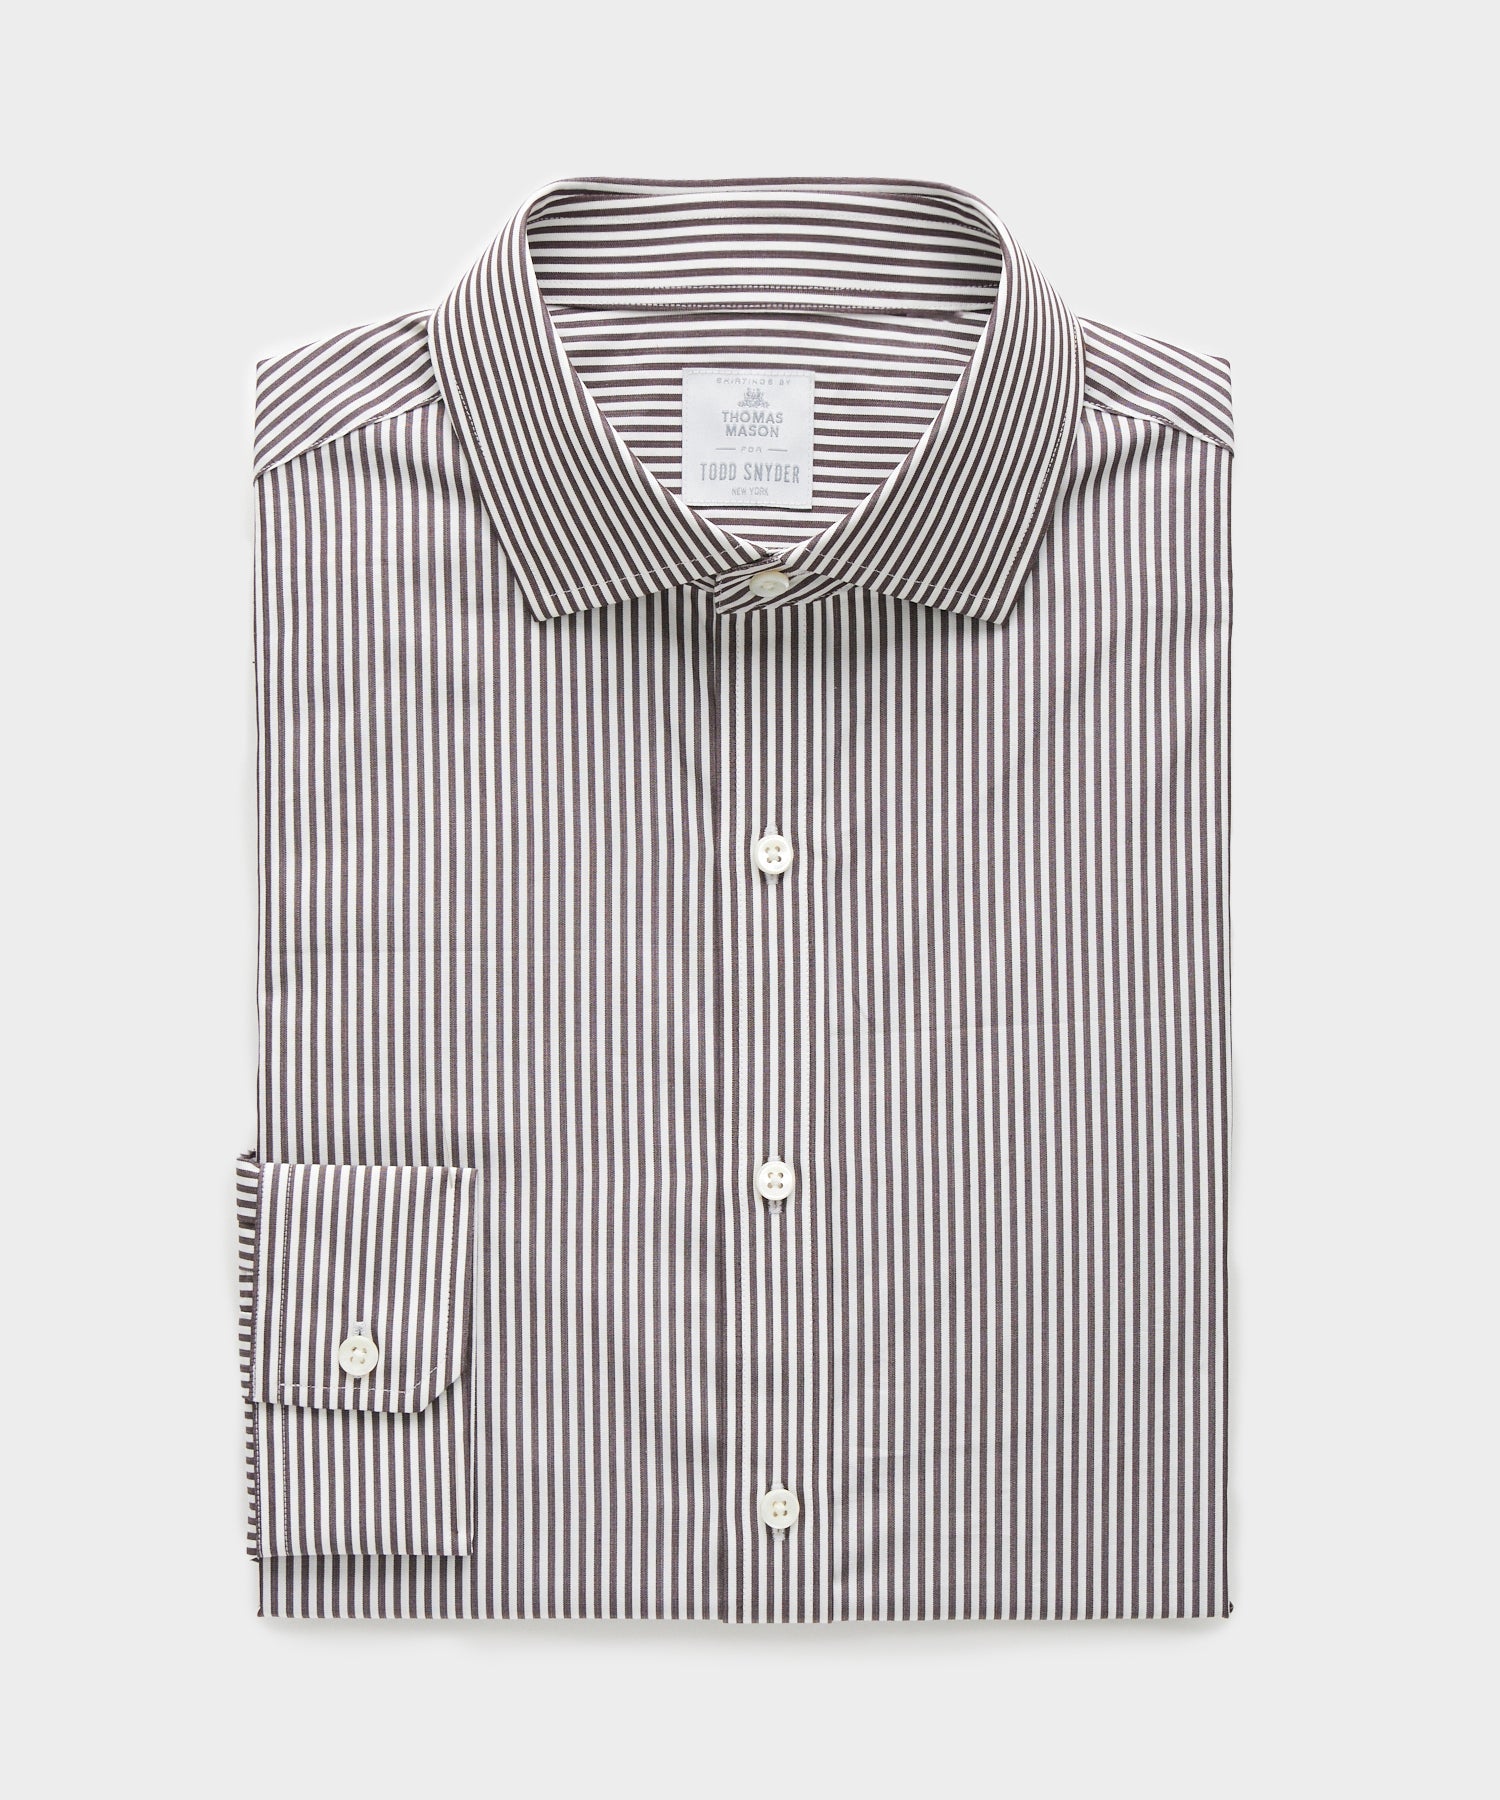 Brown Banker Stripe Spread Collar Dress Shirt